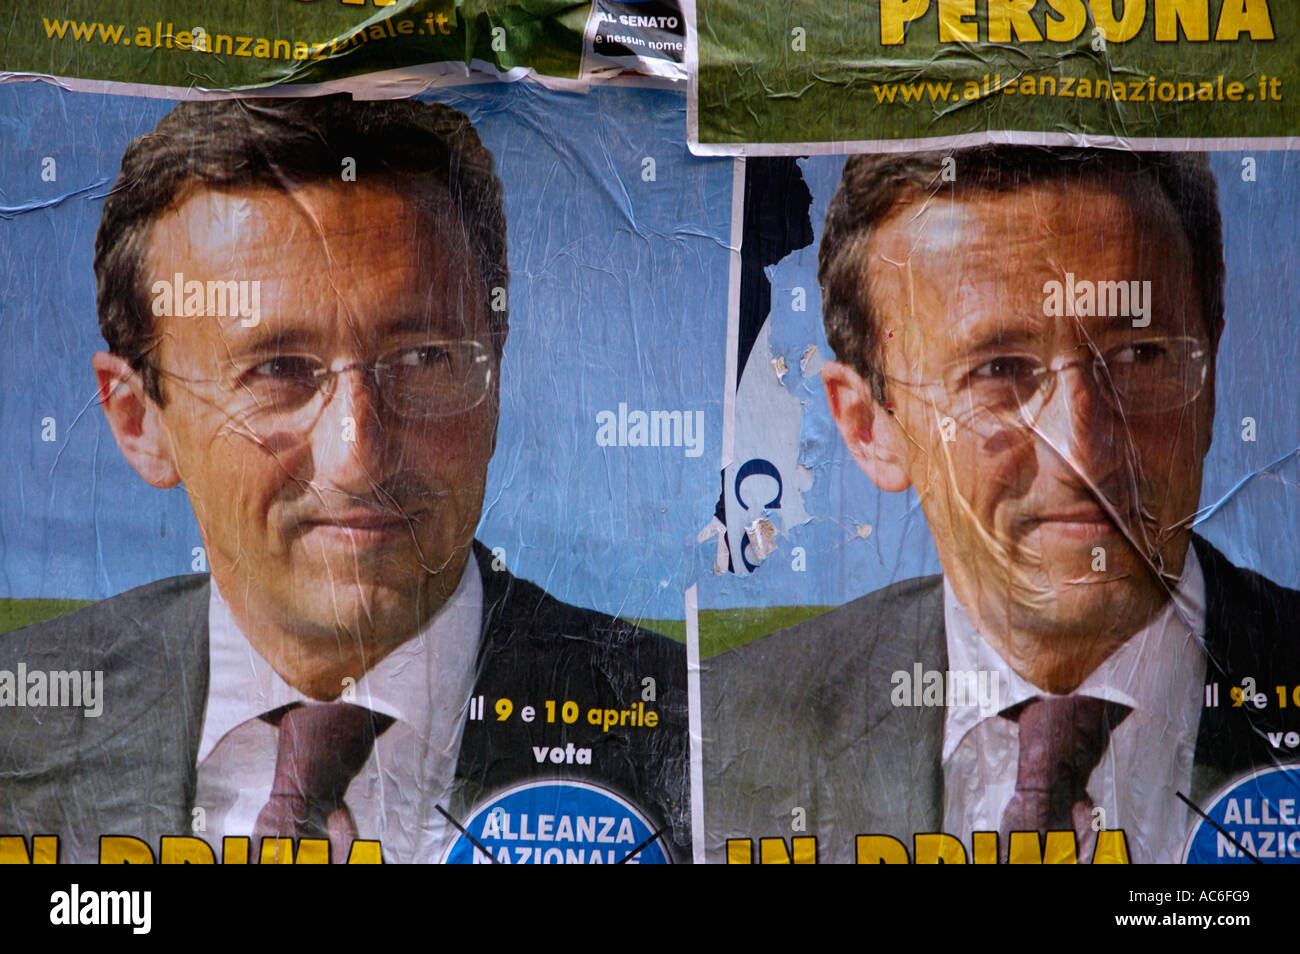 Italian Election Posters Stock Photo